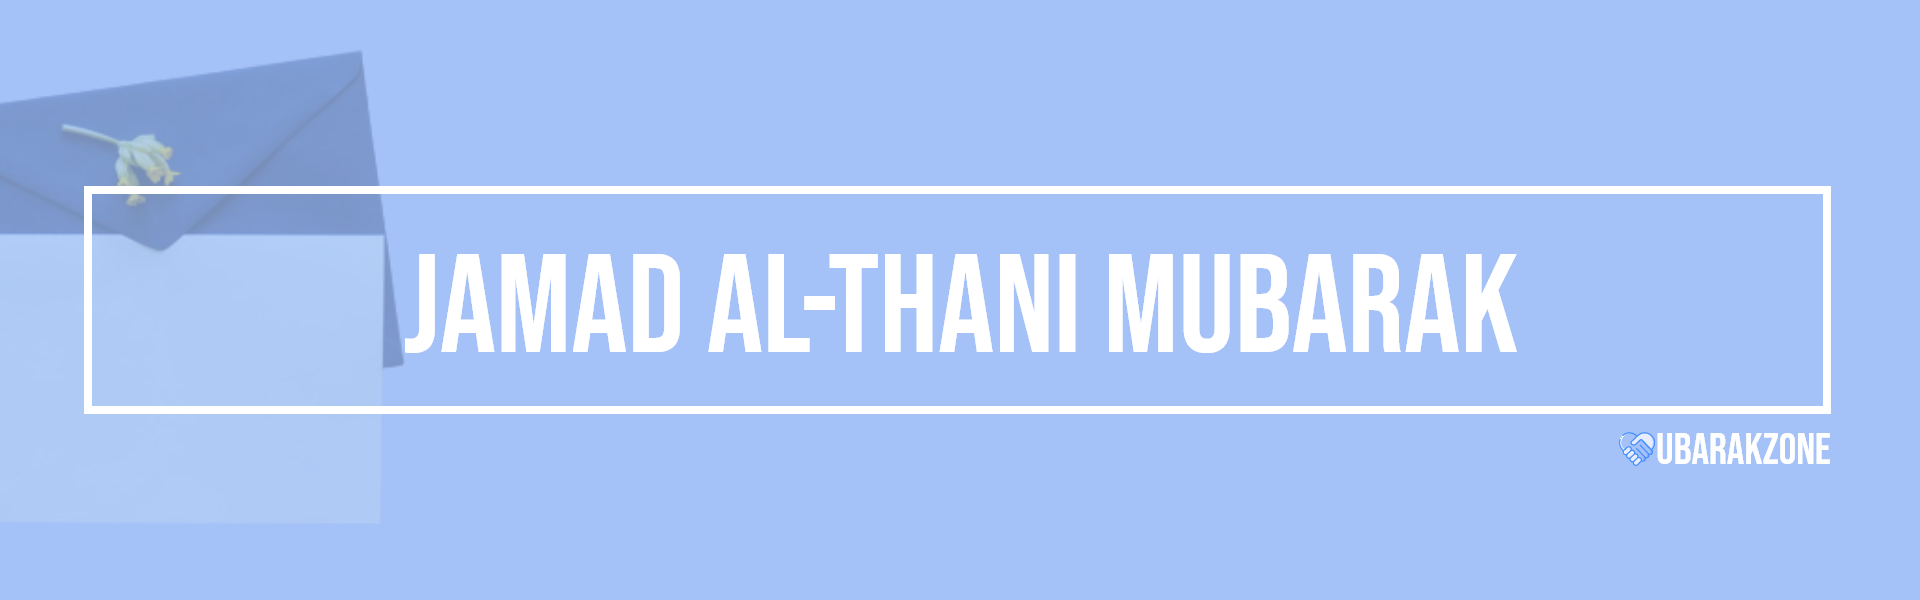 jamad al-thani mubarak wishes messages